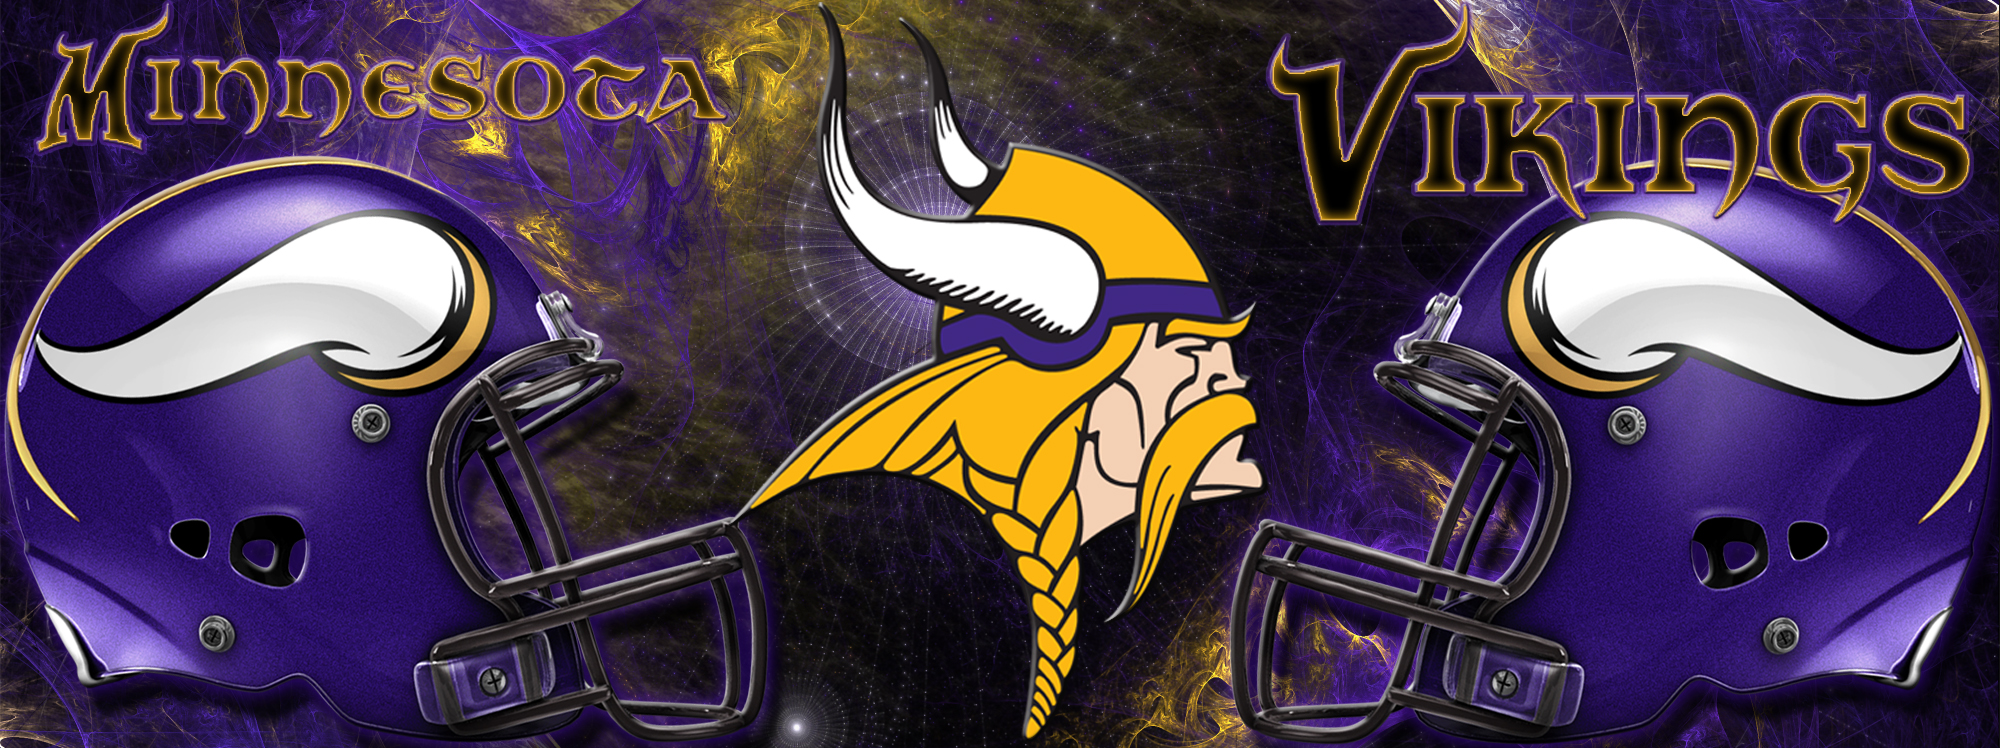 Minnesota Vikings Wicked Wallpaper Free Download Wallpaper